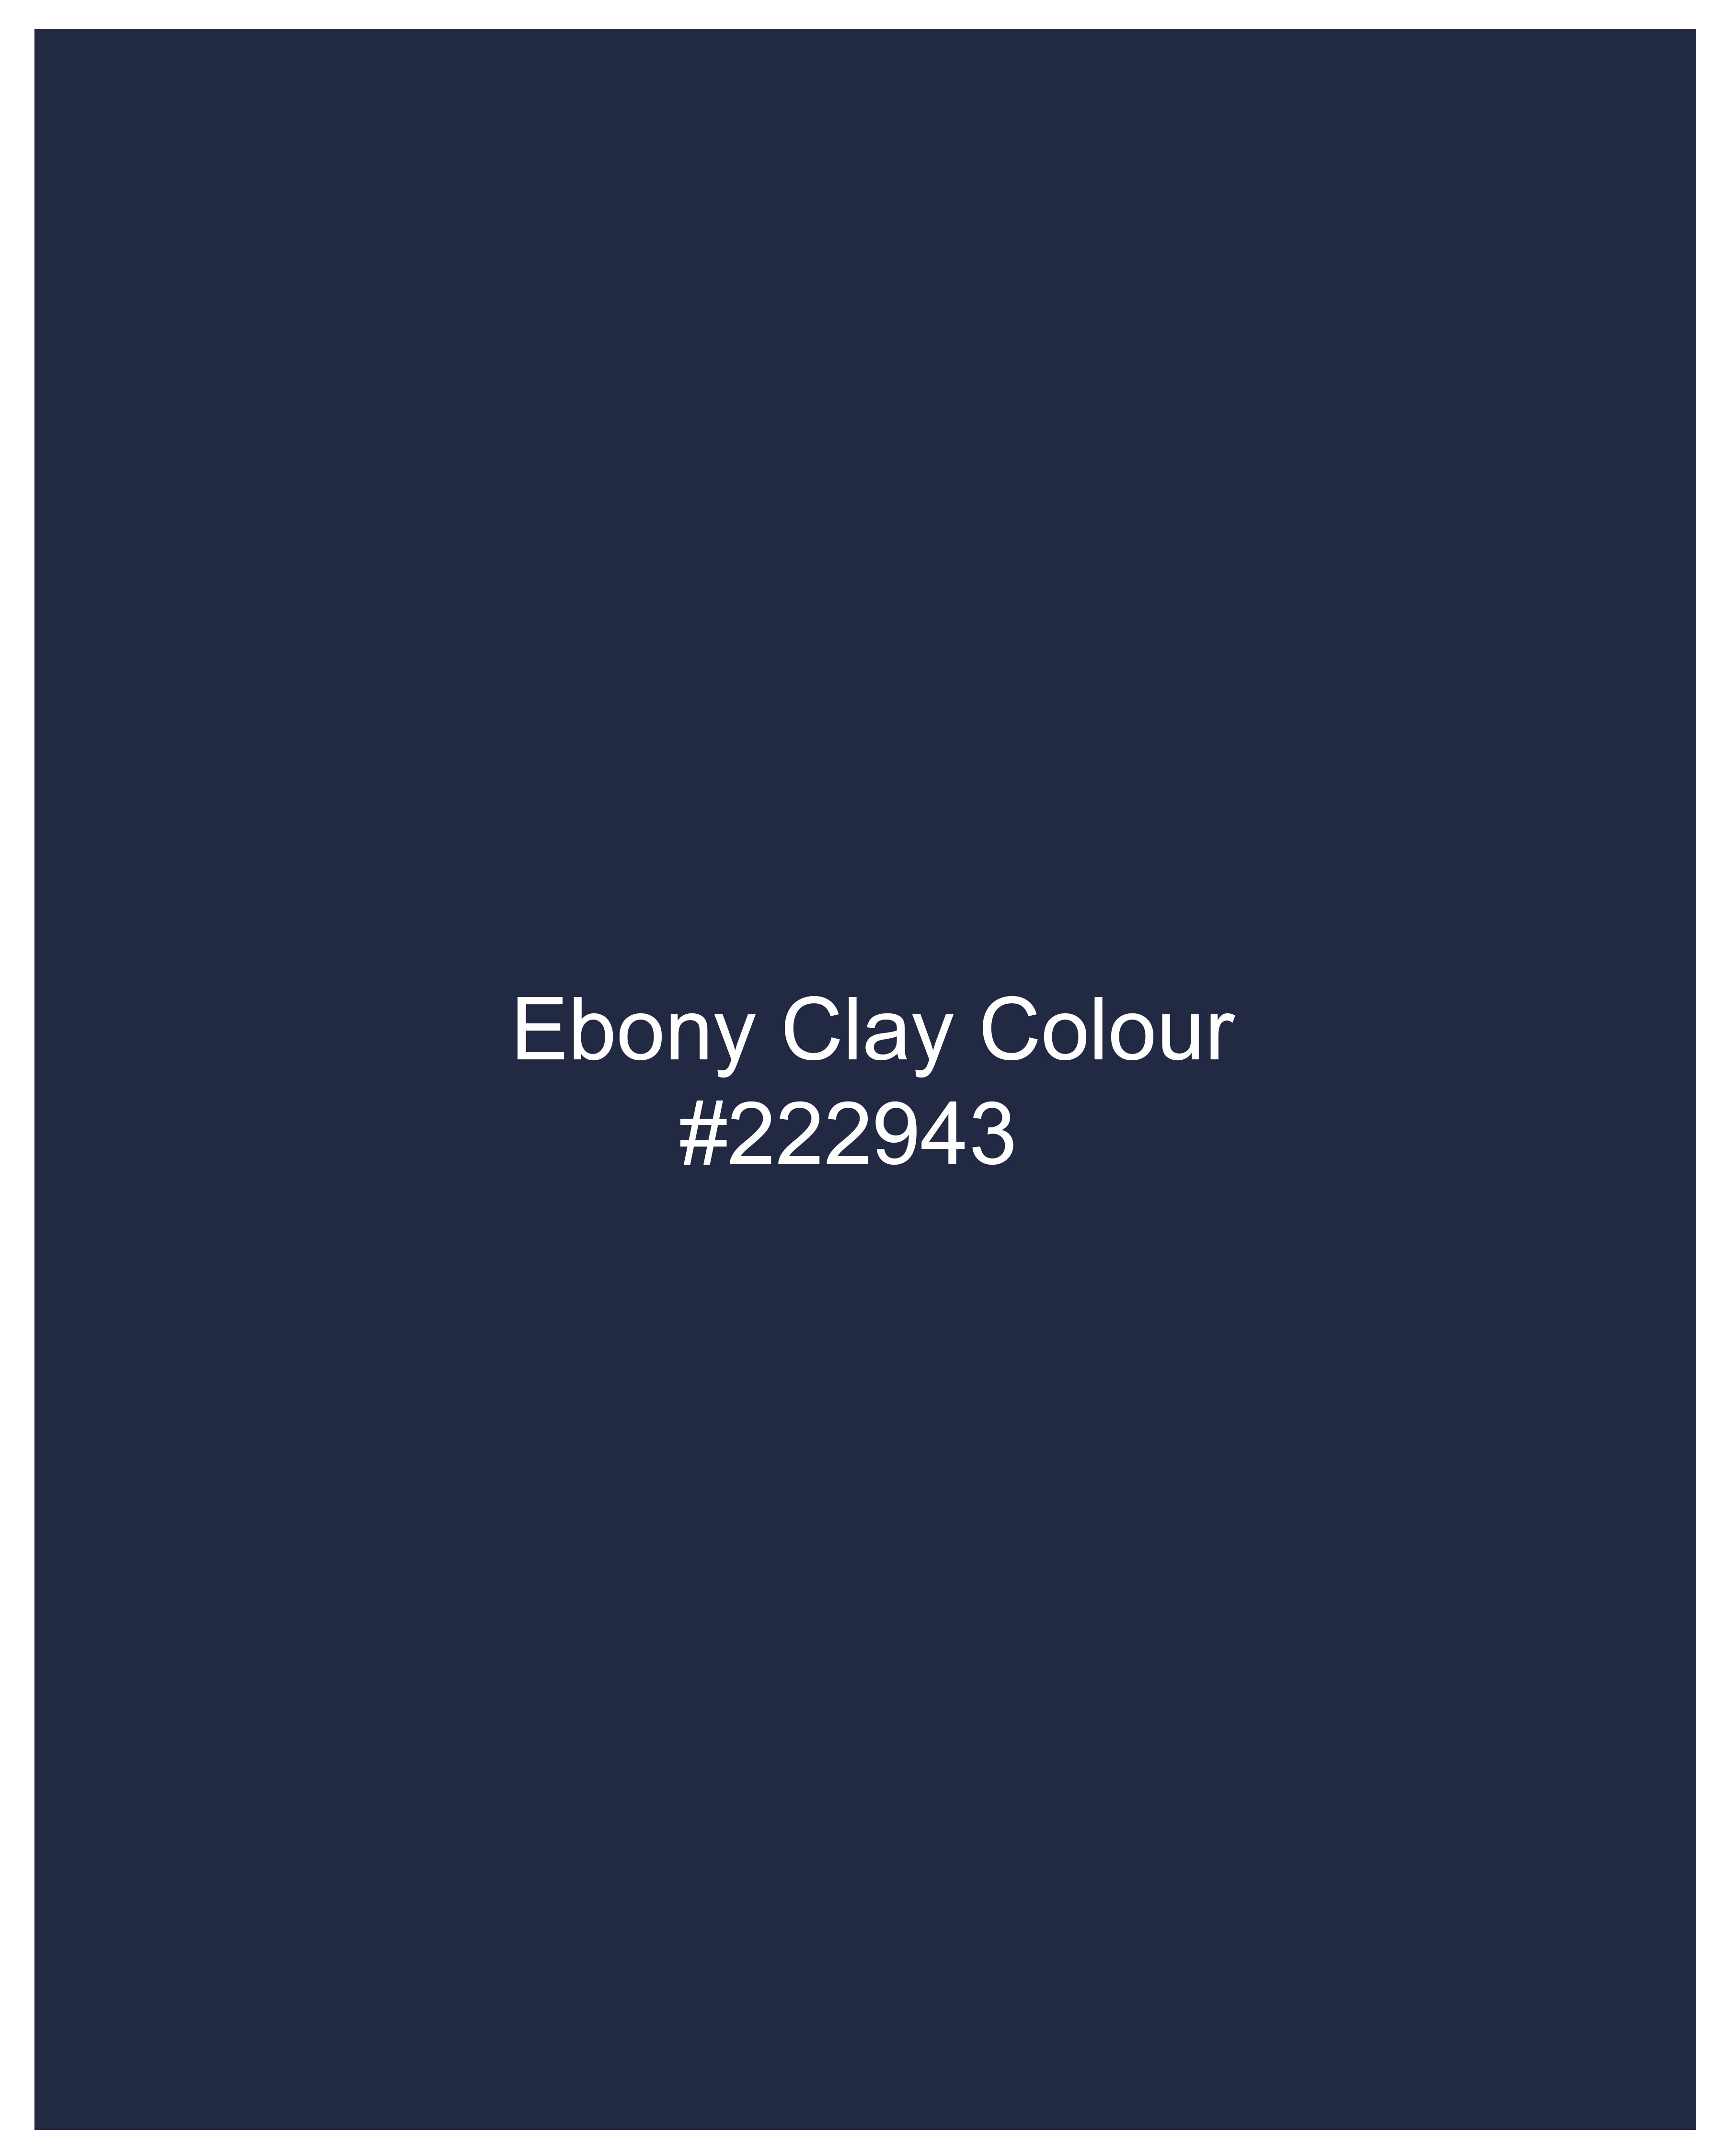 Ebony Clay Blue Royal Oxford Shorts SR255-28, SR255-30, SR255-32, SR255-34, SR255-36, SR255-38, SR255-40, SR255-42, SR255-44